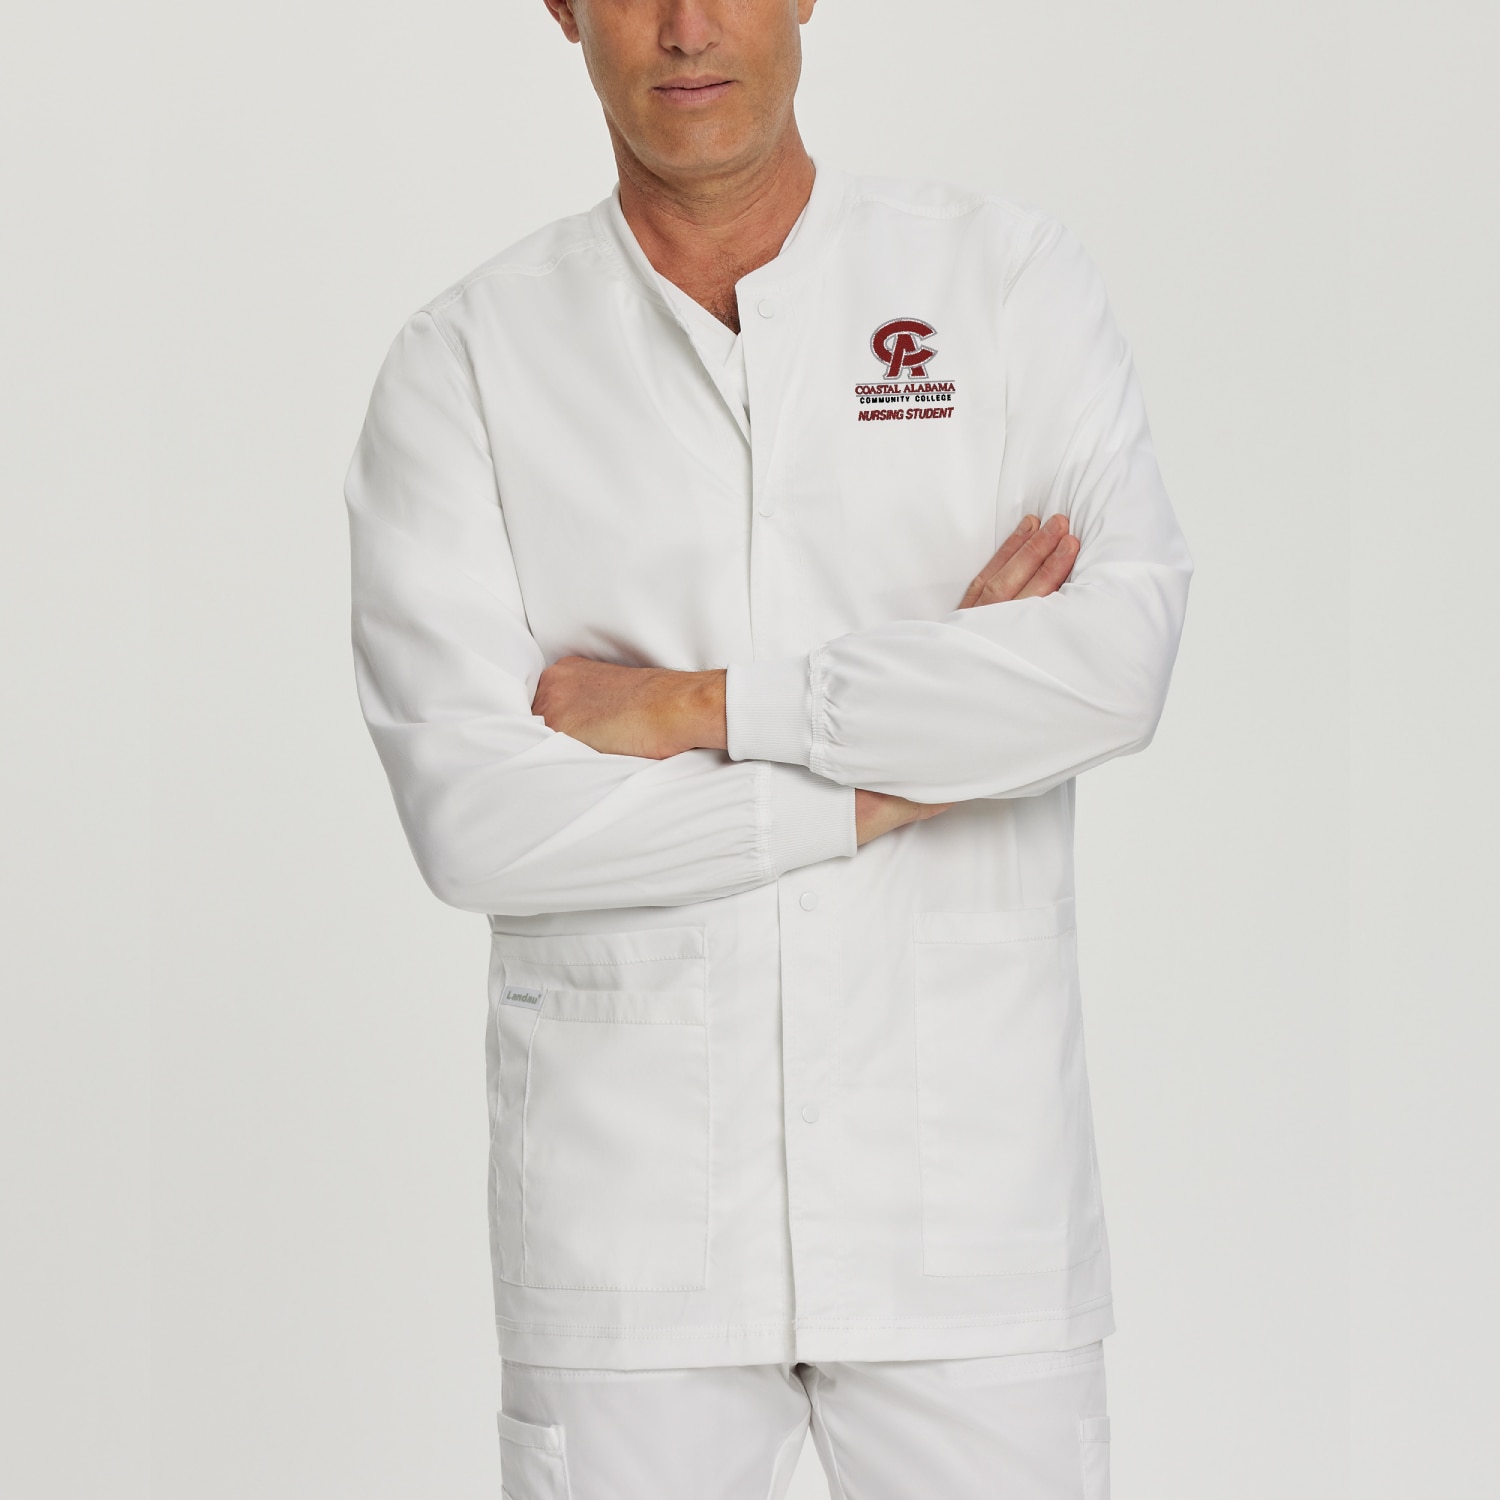 Men's Nursing White Warm-up Coat